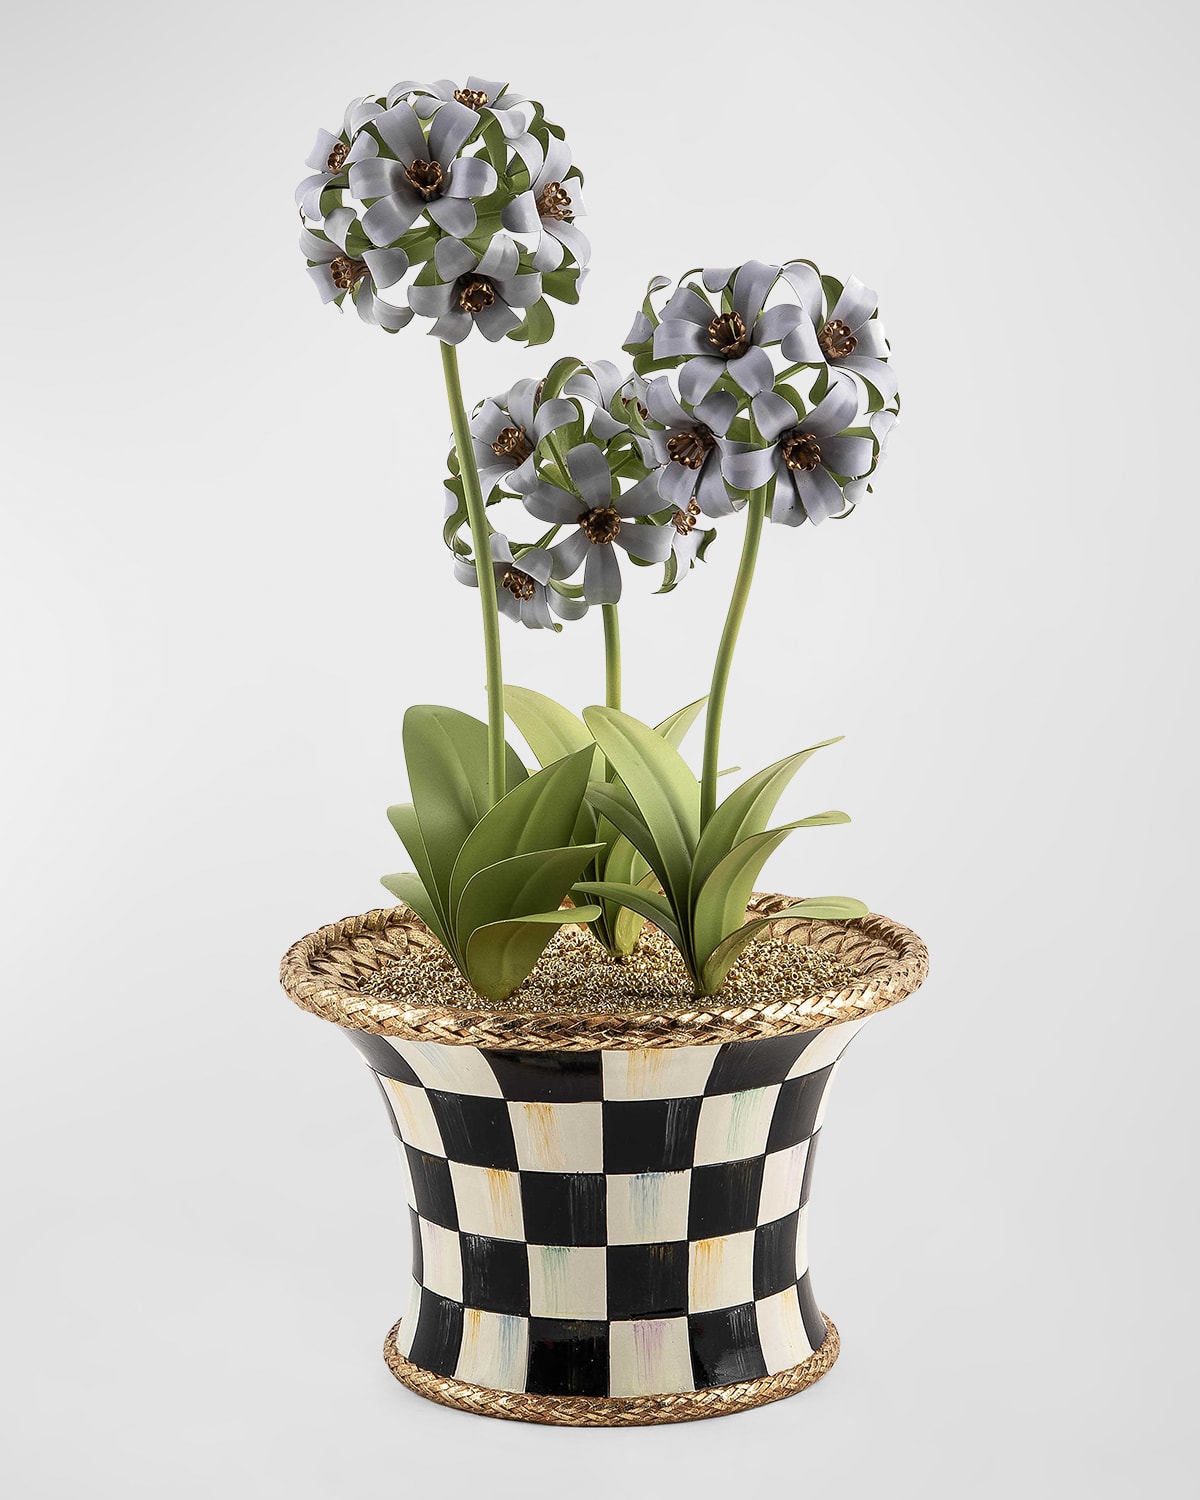 Mackenzie-childs Botany Potted Hyacinth Arrangement In Black